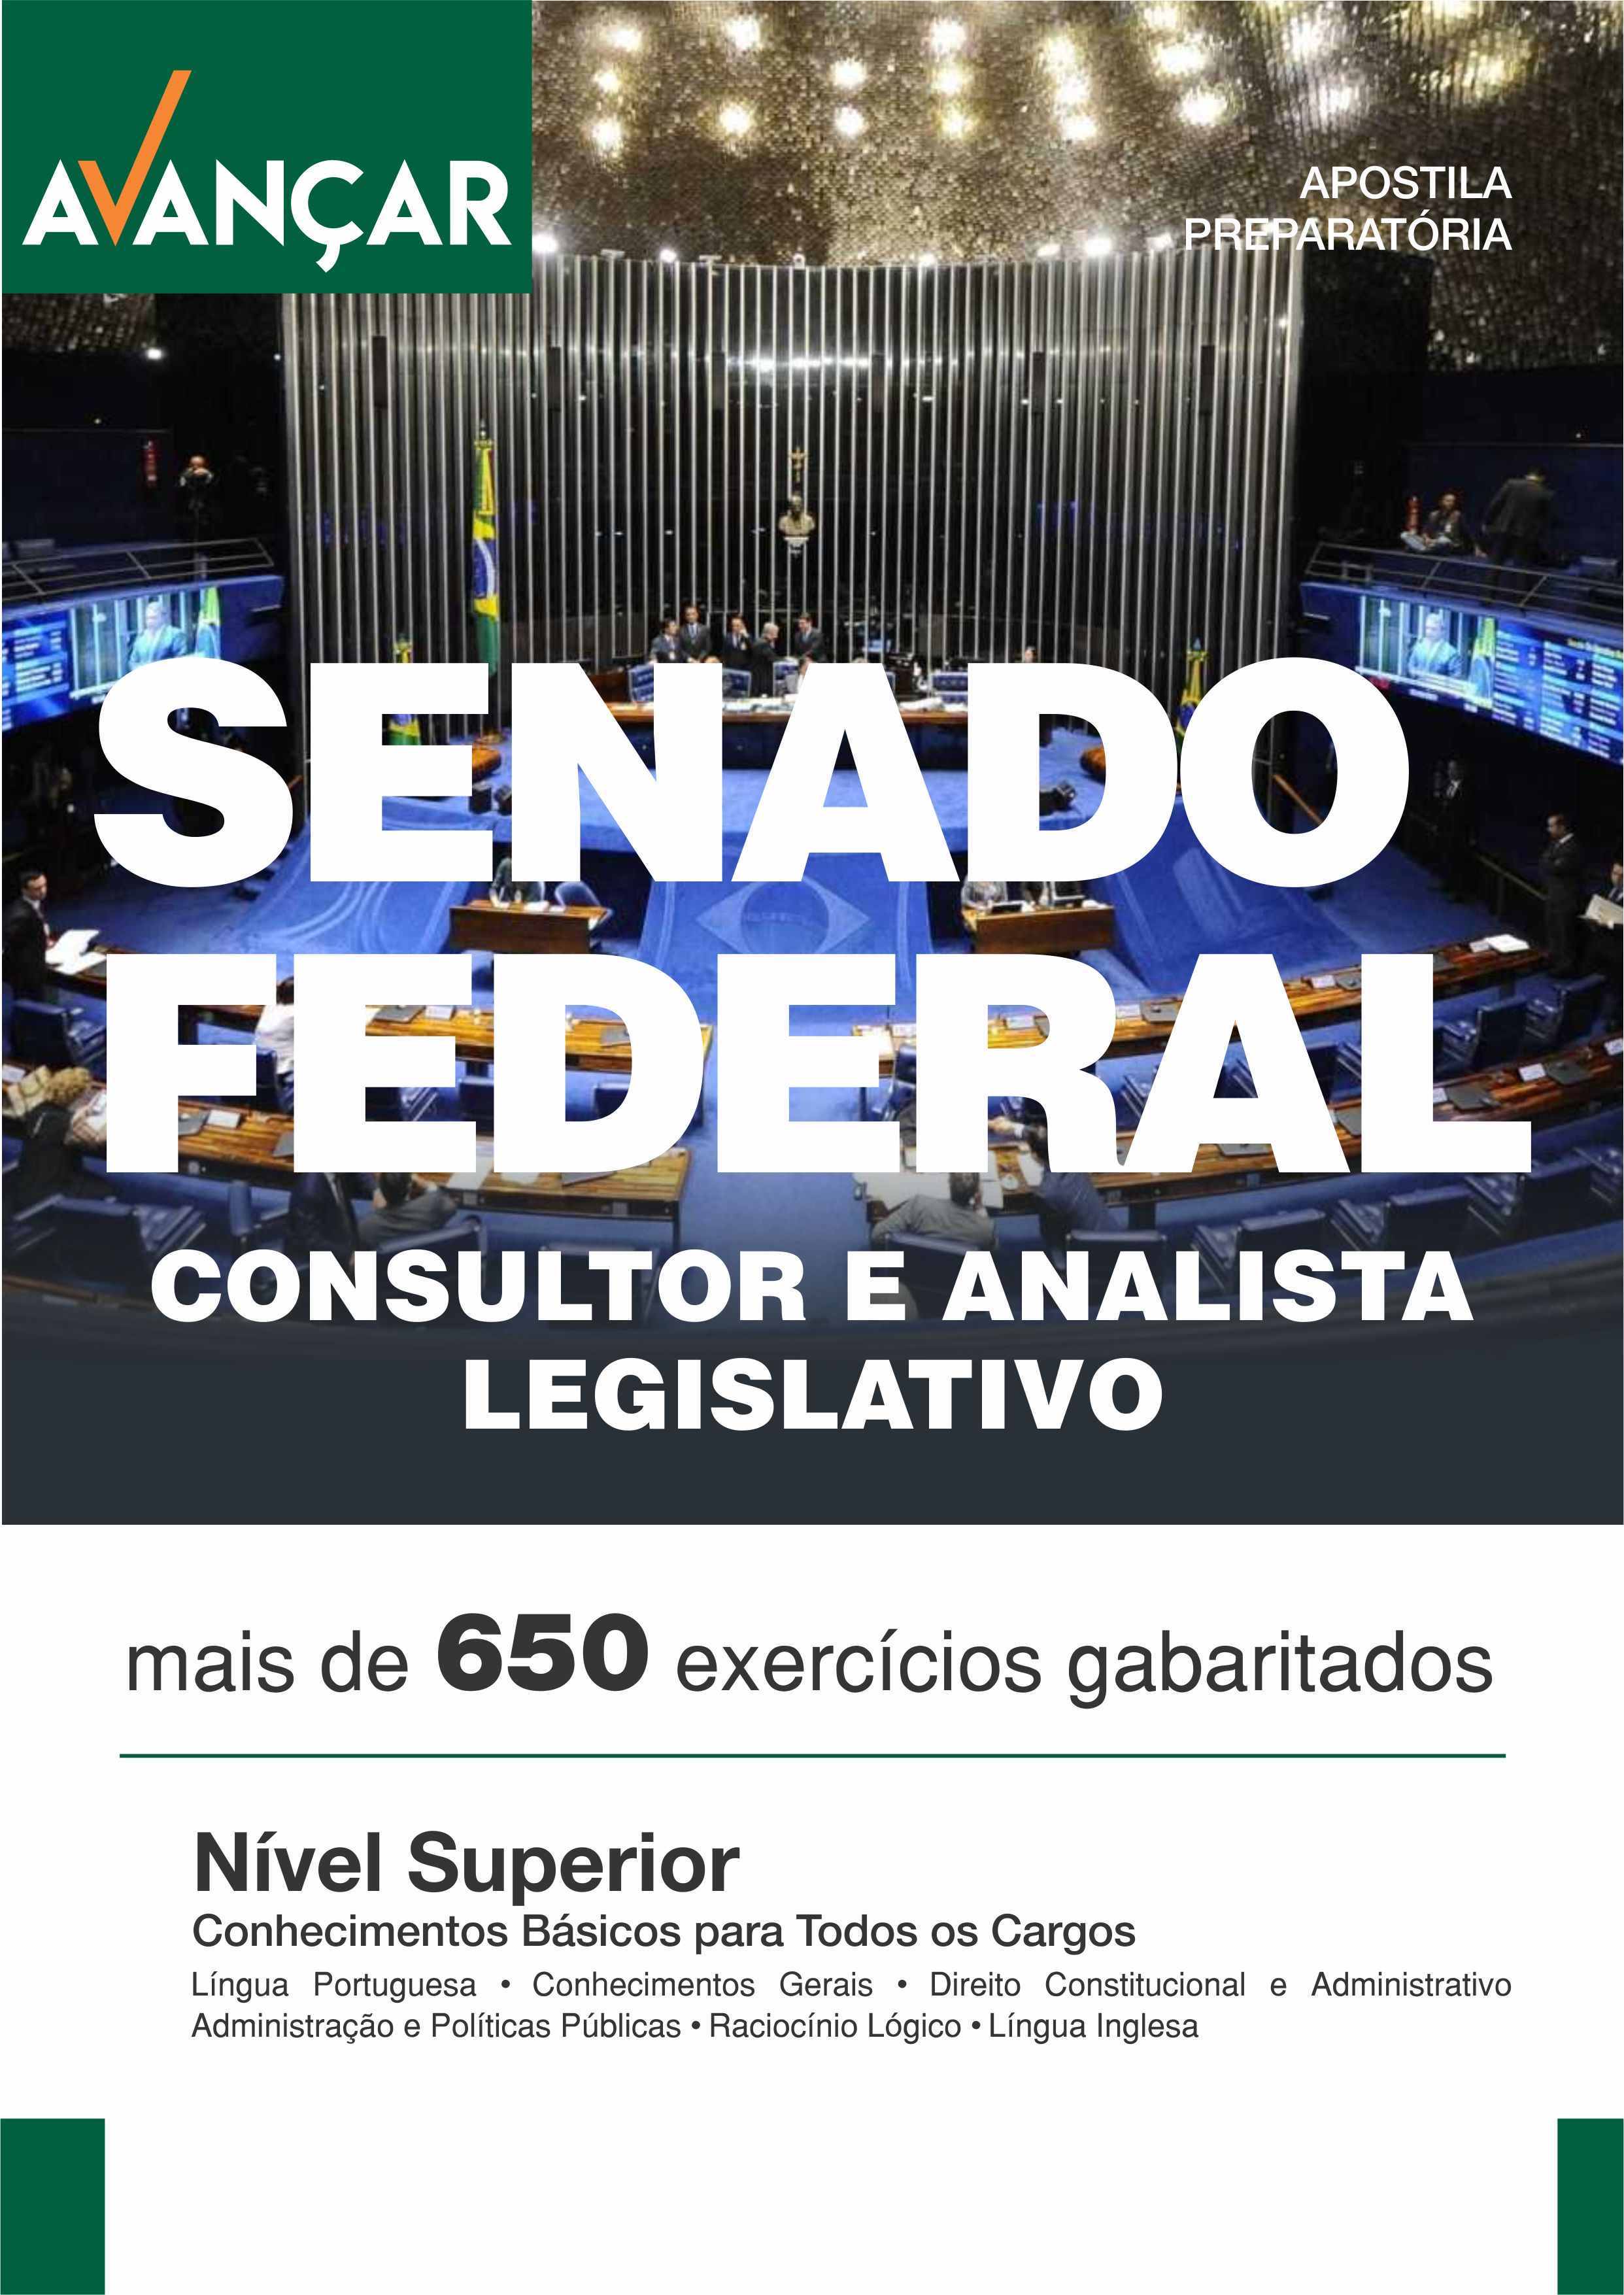 Senado Federal apostila para o concurso do senado